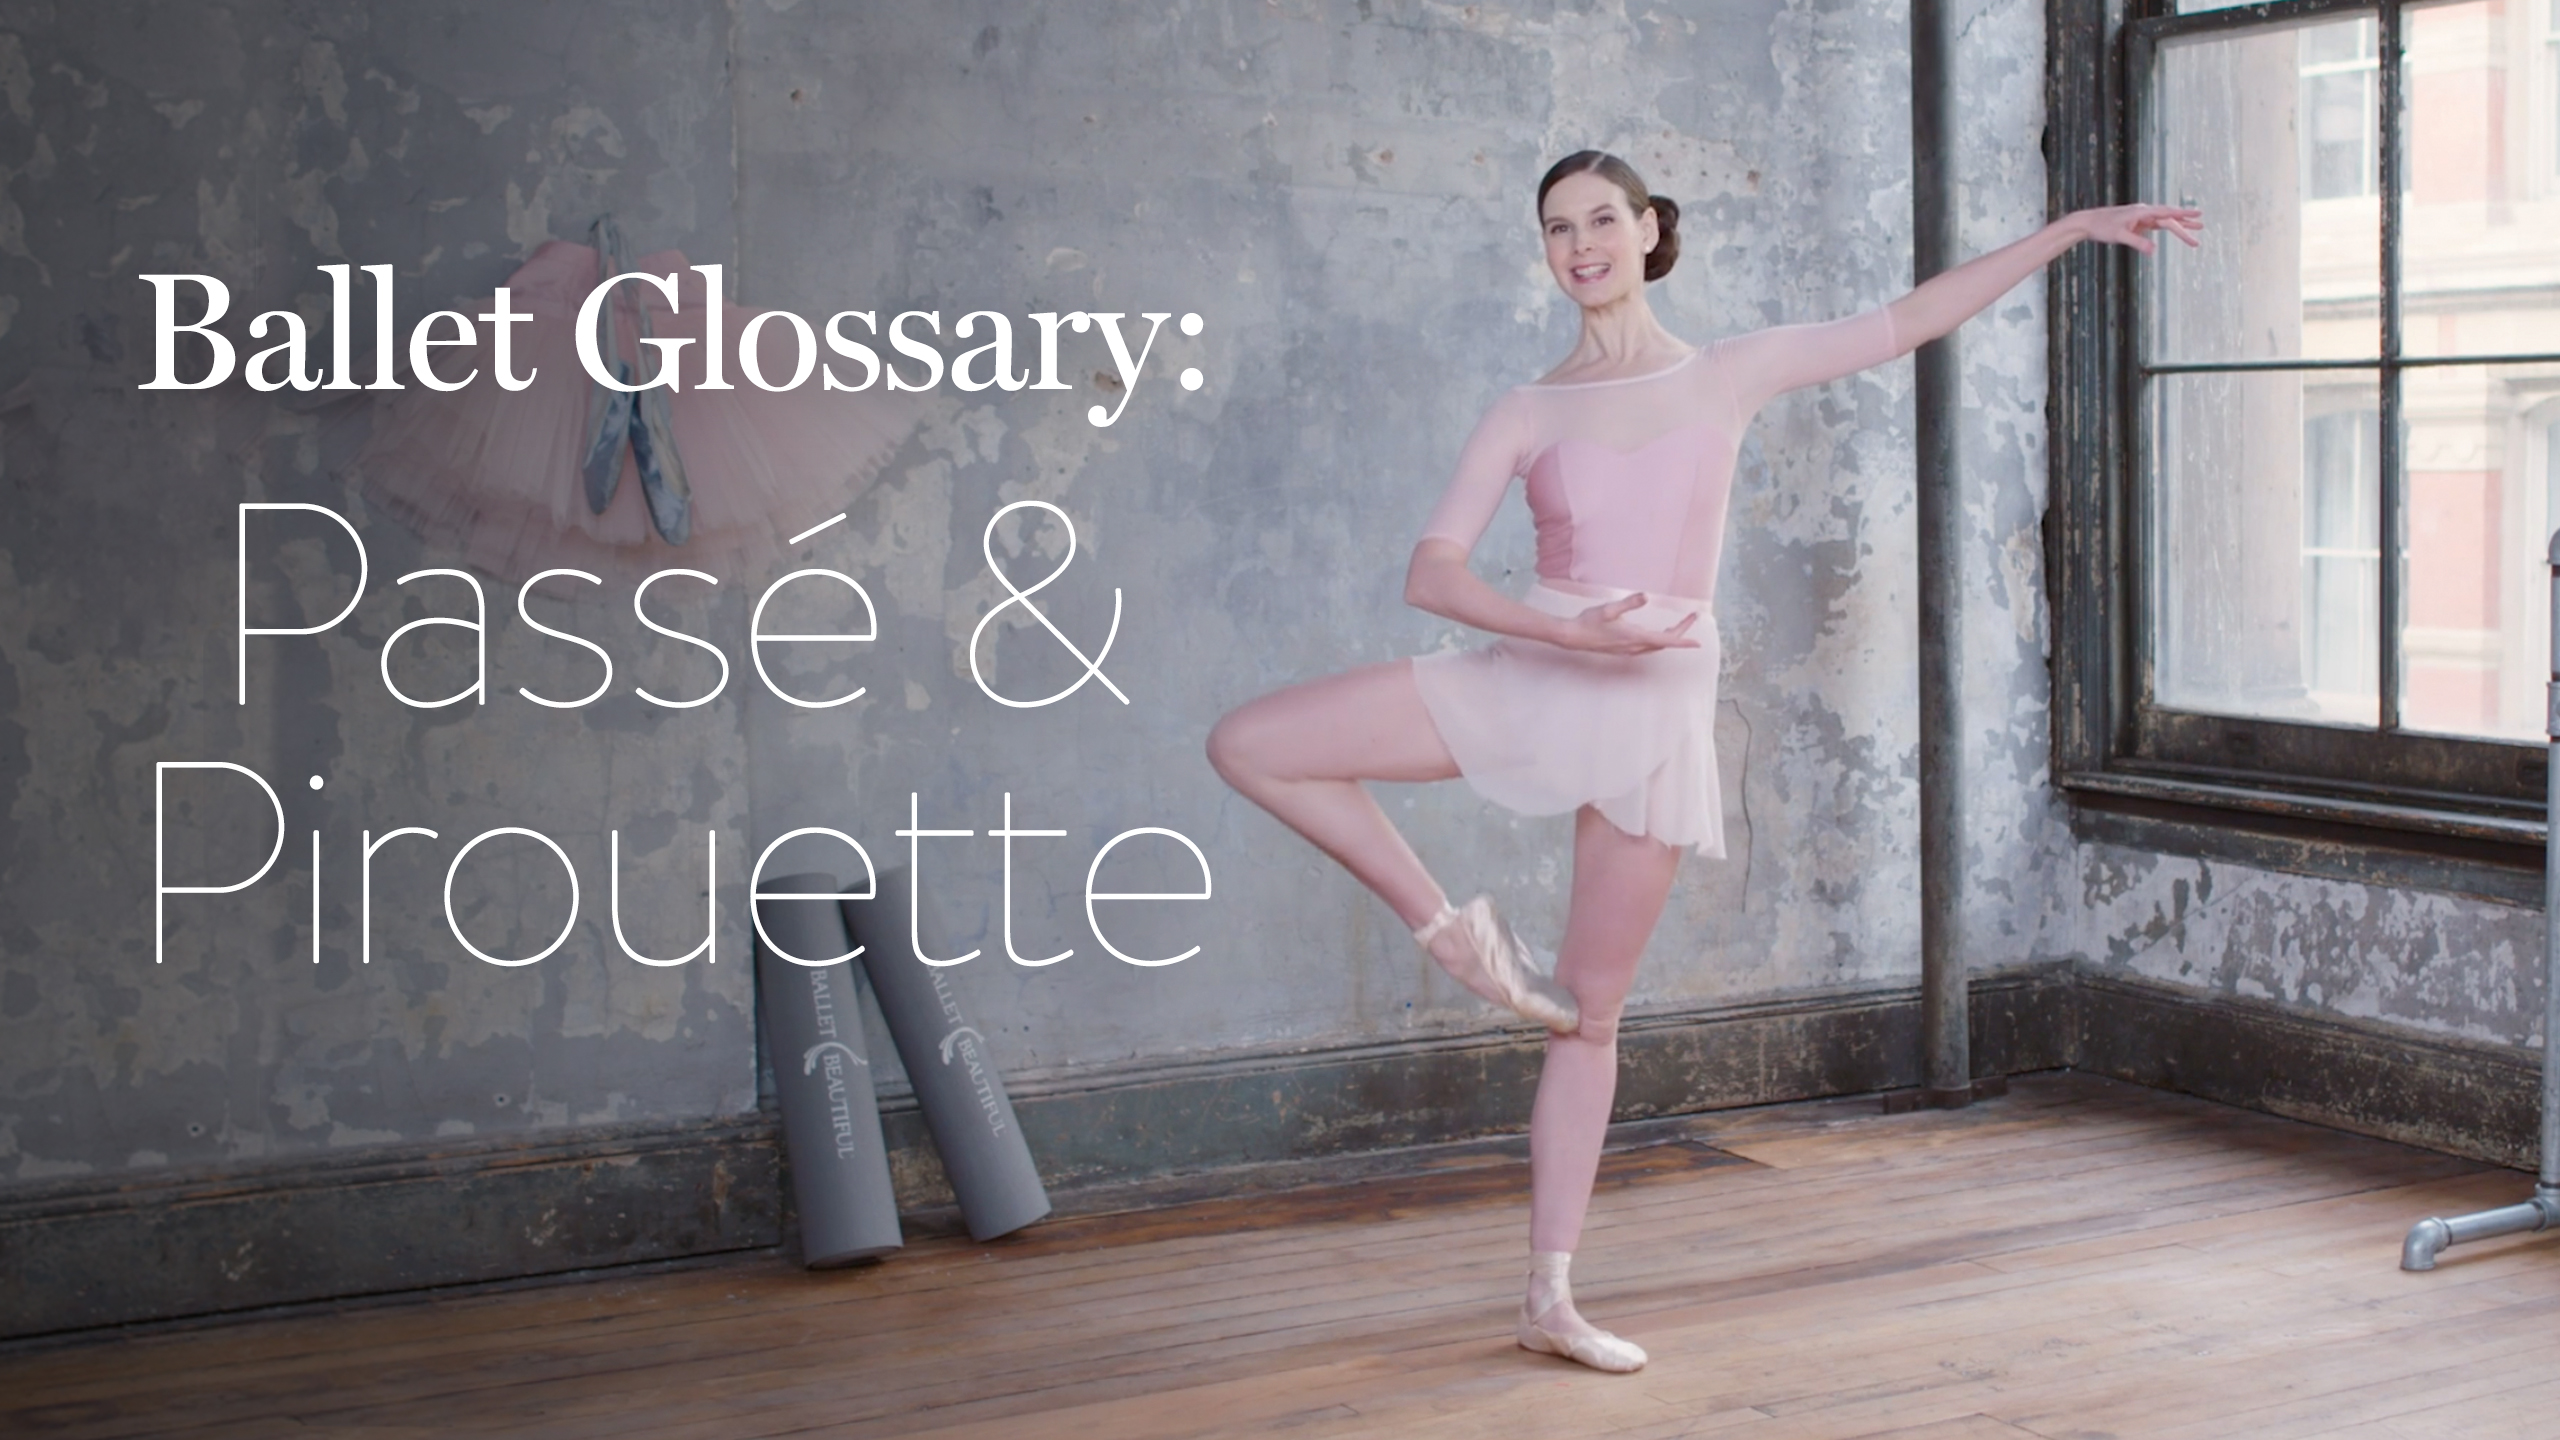 Ballet Glossary: Pirouette & Passé